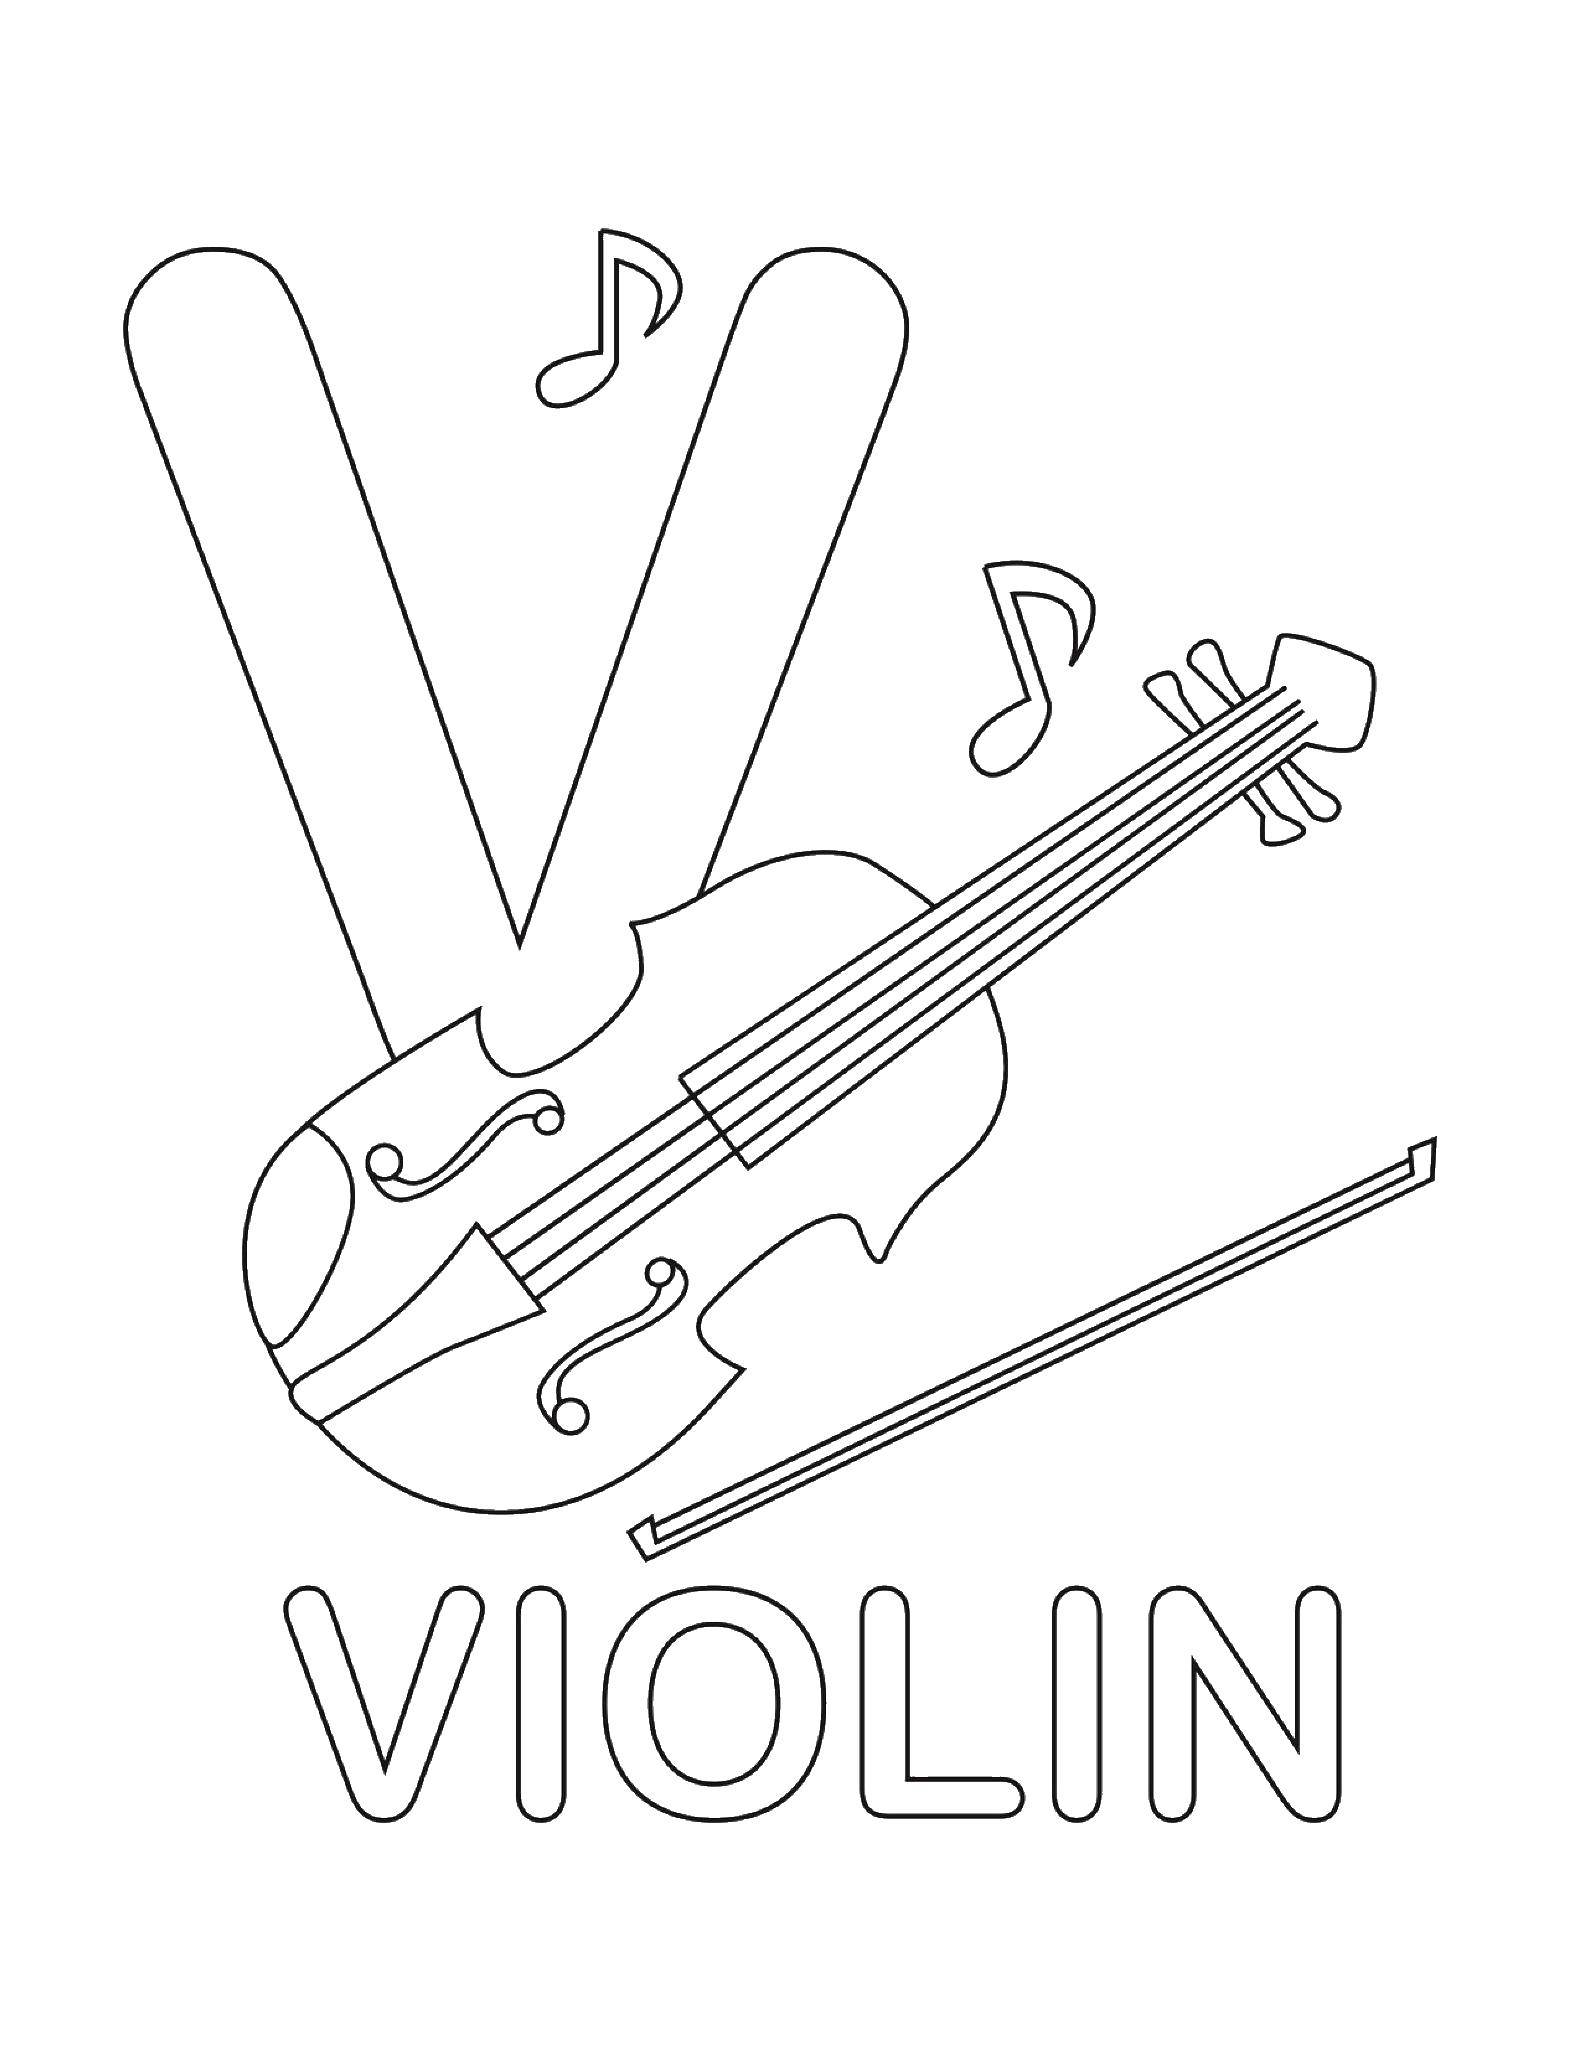 Coloring Violin. Category English words. Tags:  English words, violin.